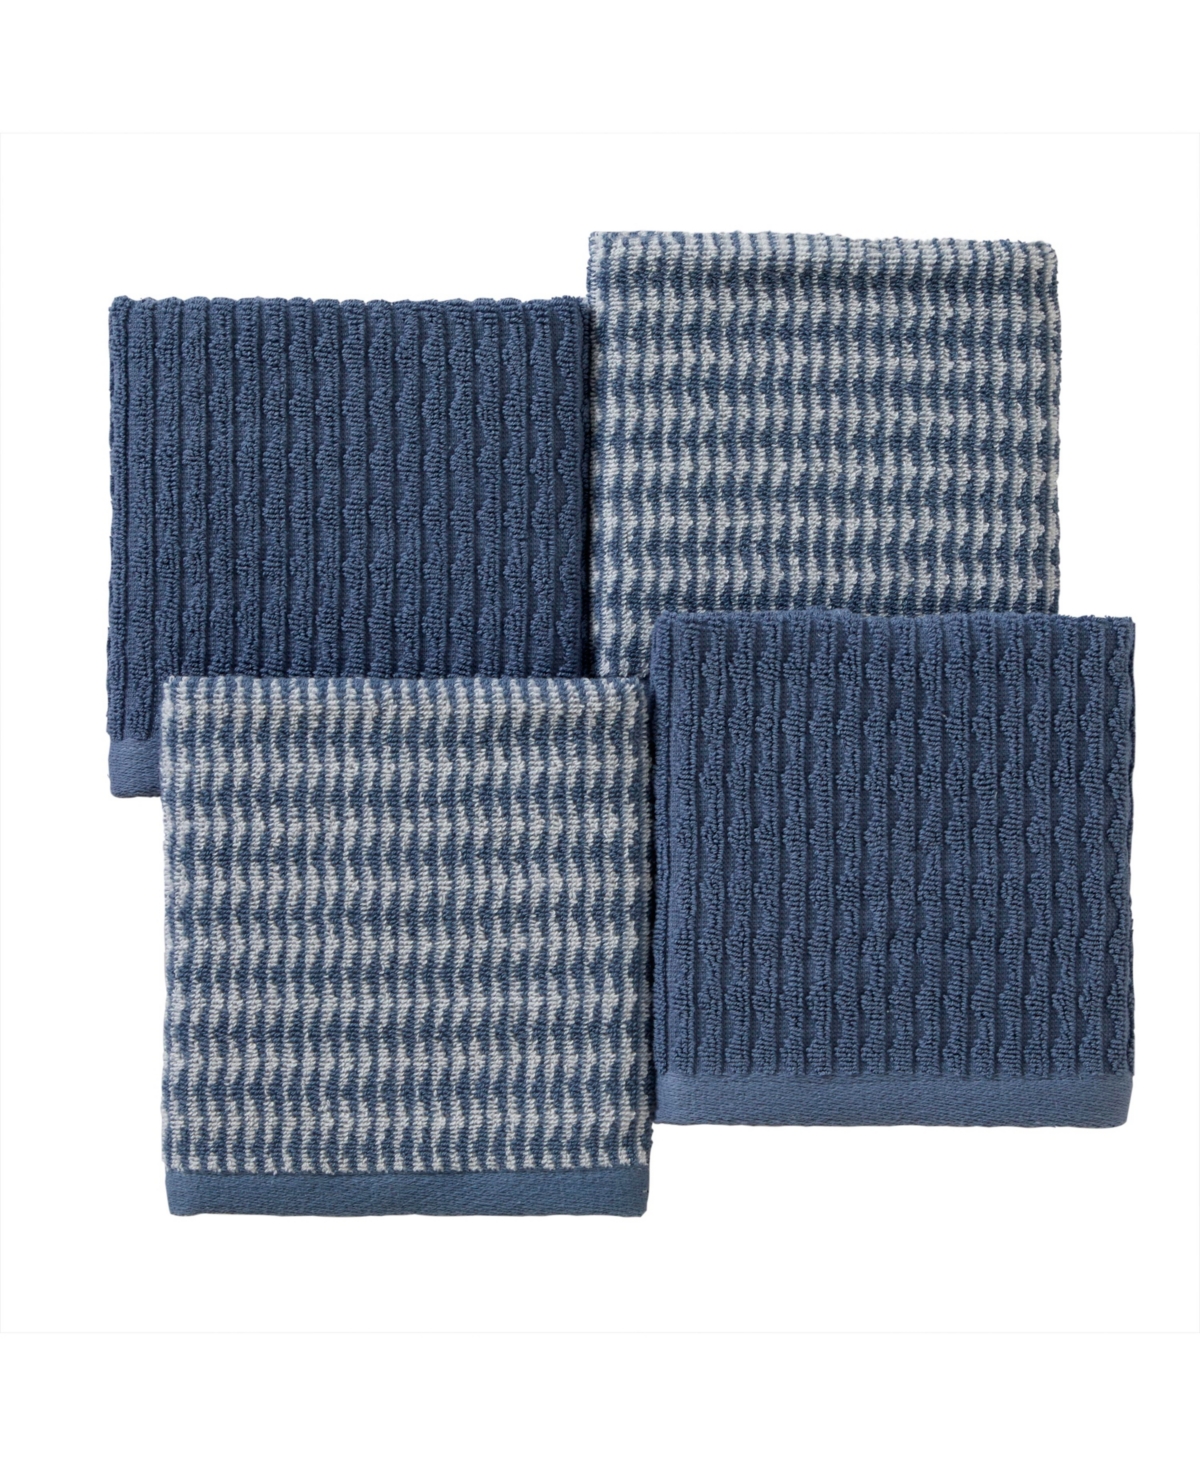 Skl Home Long Borough Turkish Cotton 4 Piece Washcloth Set, 12" X 12" In Denim Blue